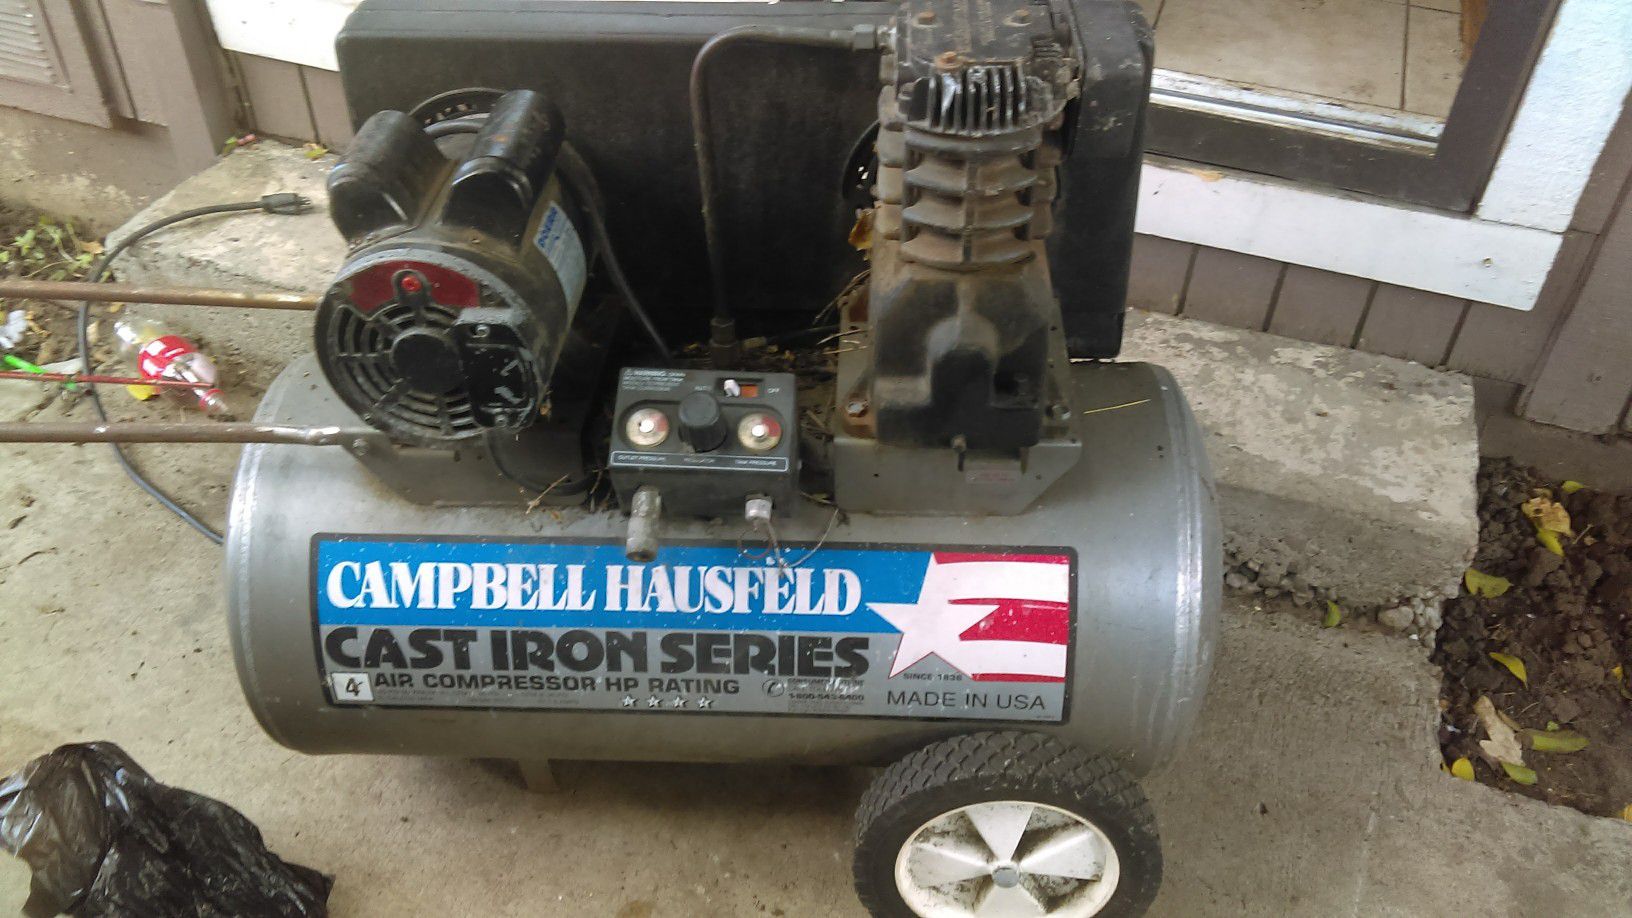 Campbell Hausfeld cast iron series 20 gallon air compressor